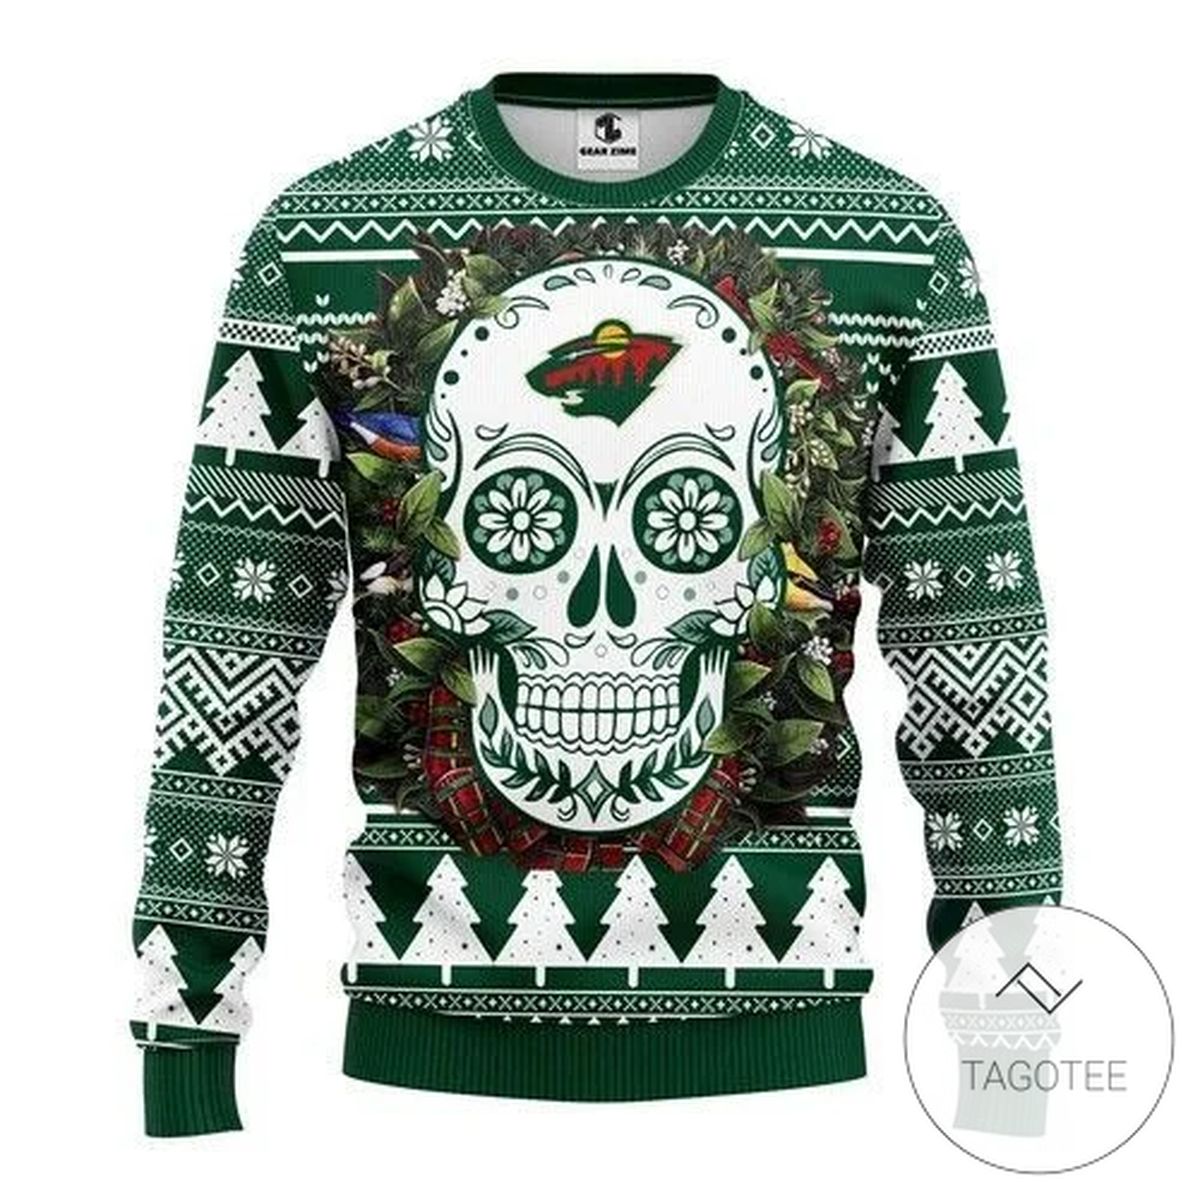 Nhl Minnesota Wild Skull Flower Sweatshirt Knitted Ugly Christmas Sweater